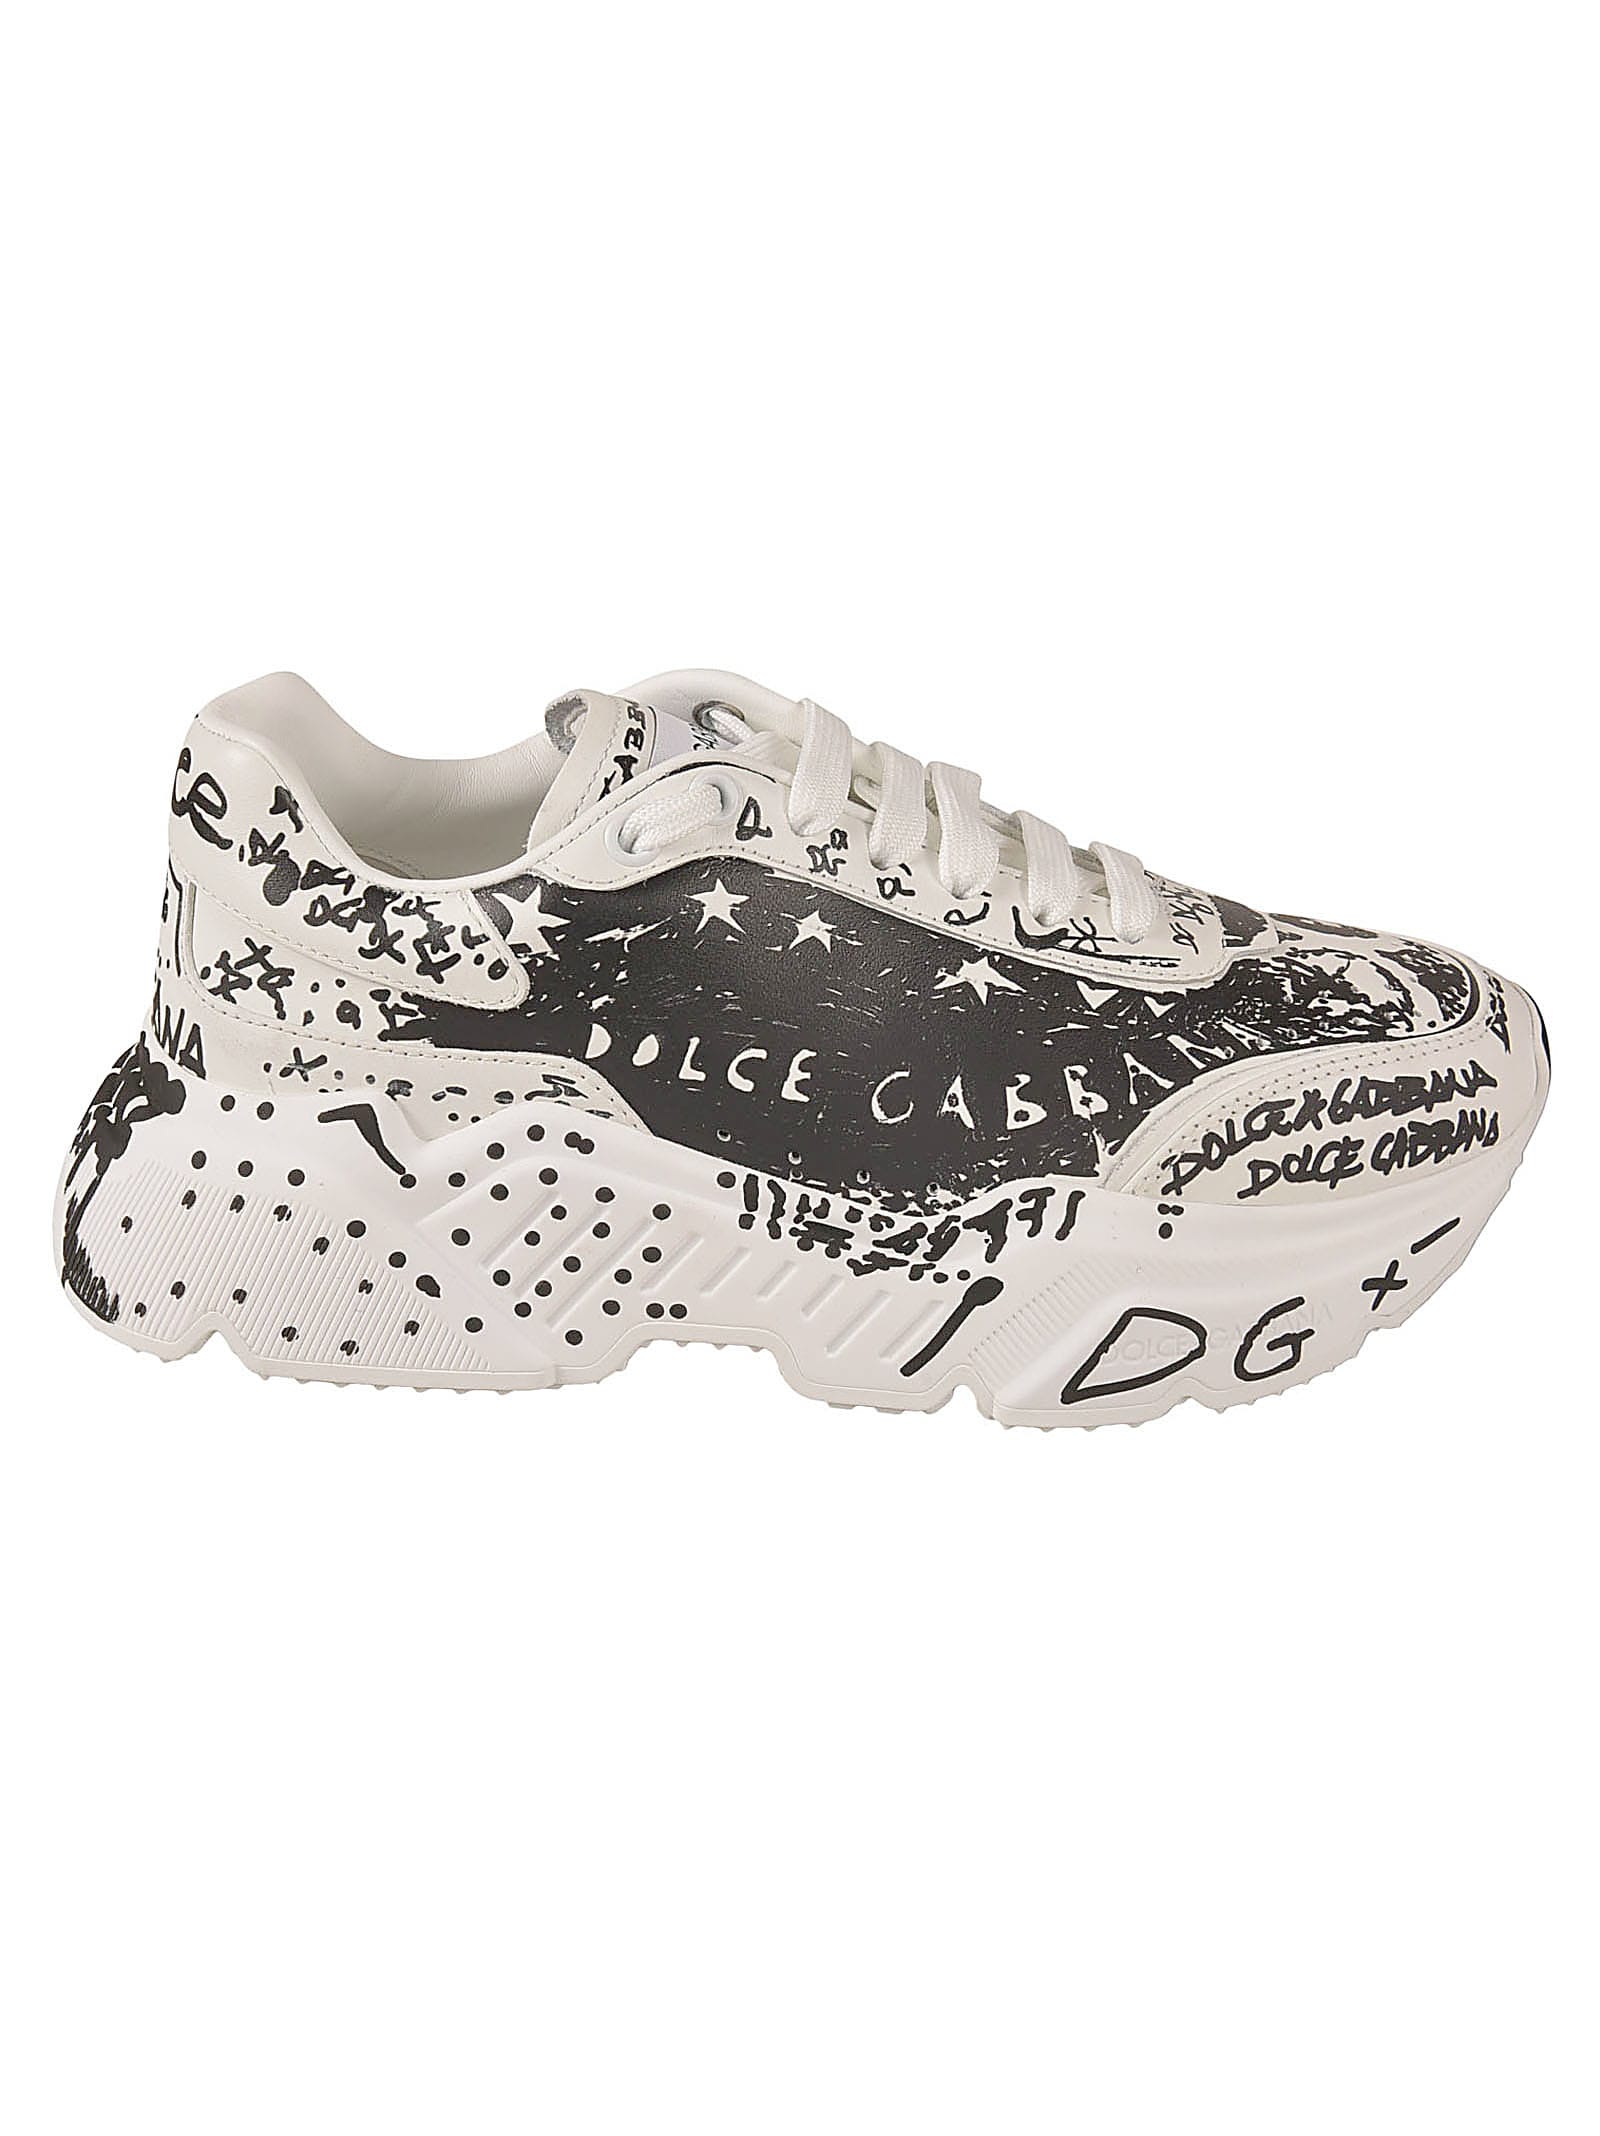 Dolce & Gabbana Graffiti Logo Sneakers